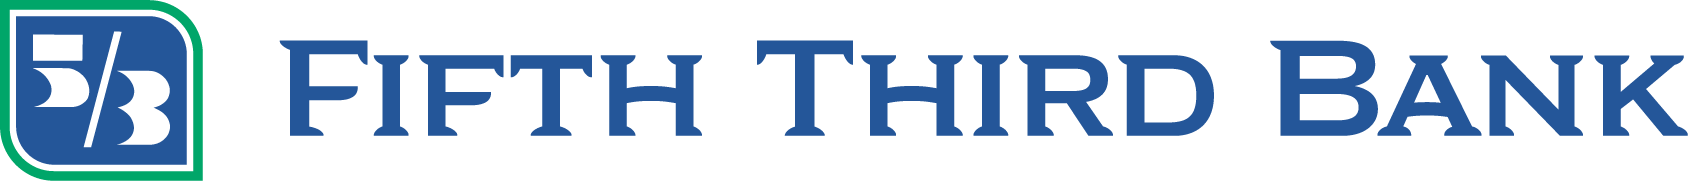 Fifth Third Bank, National Association logo